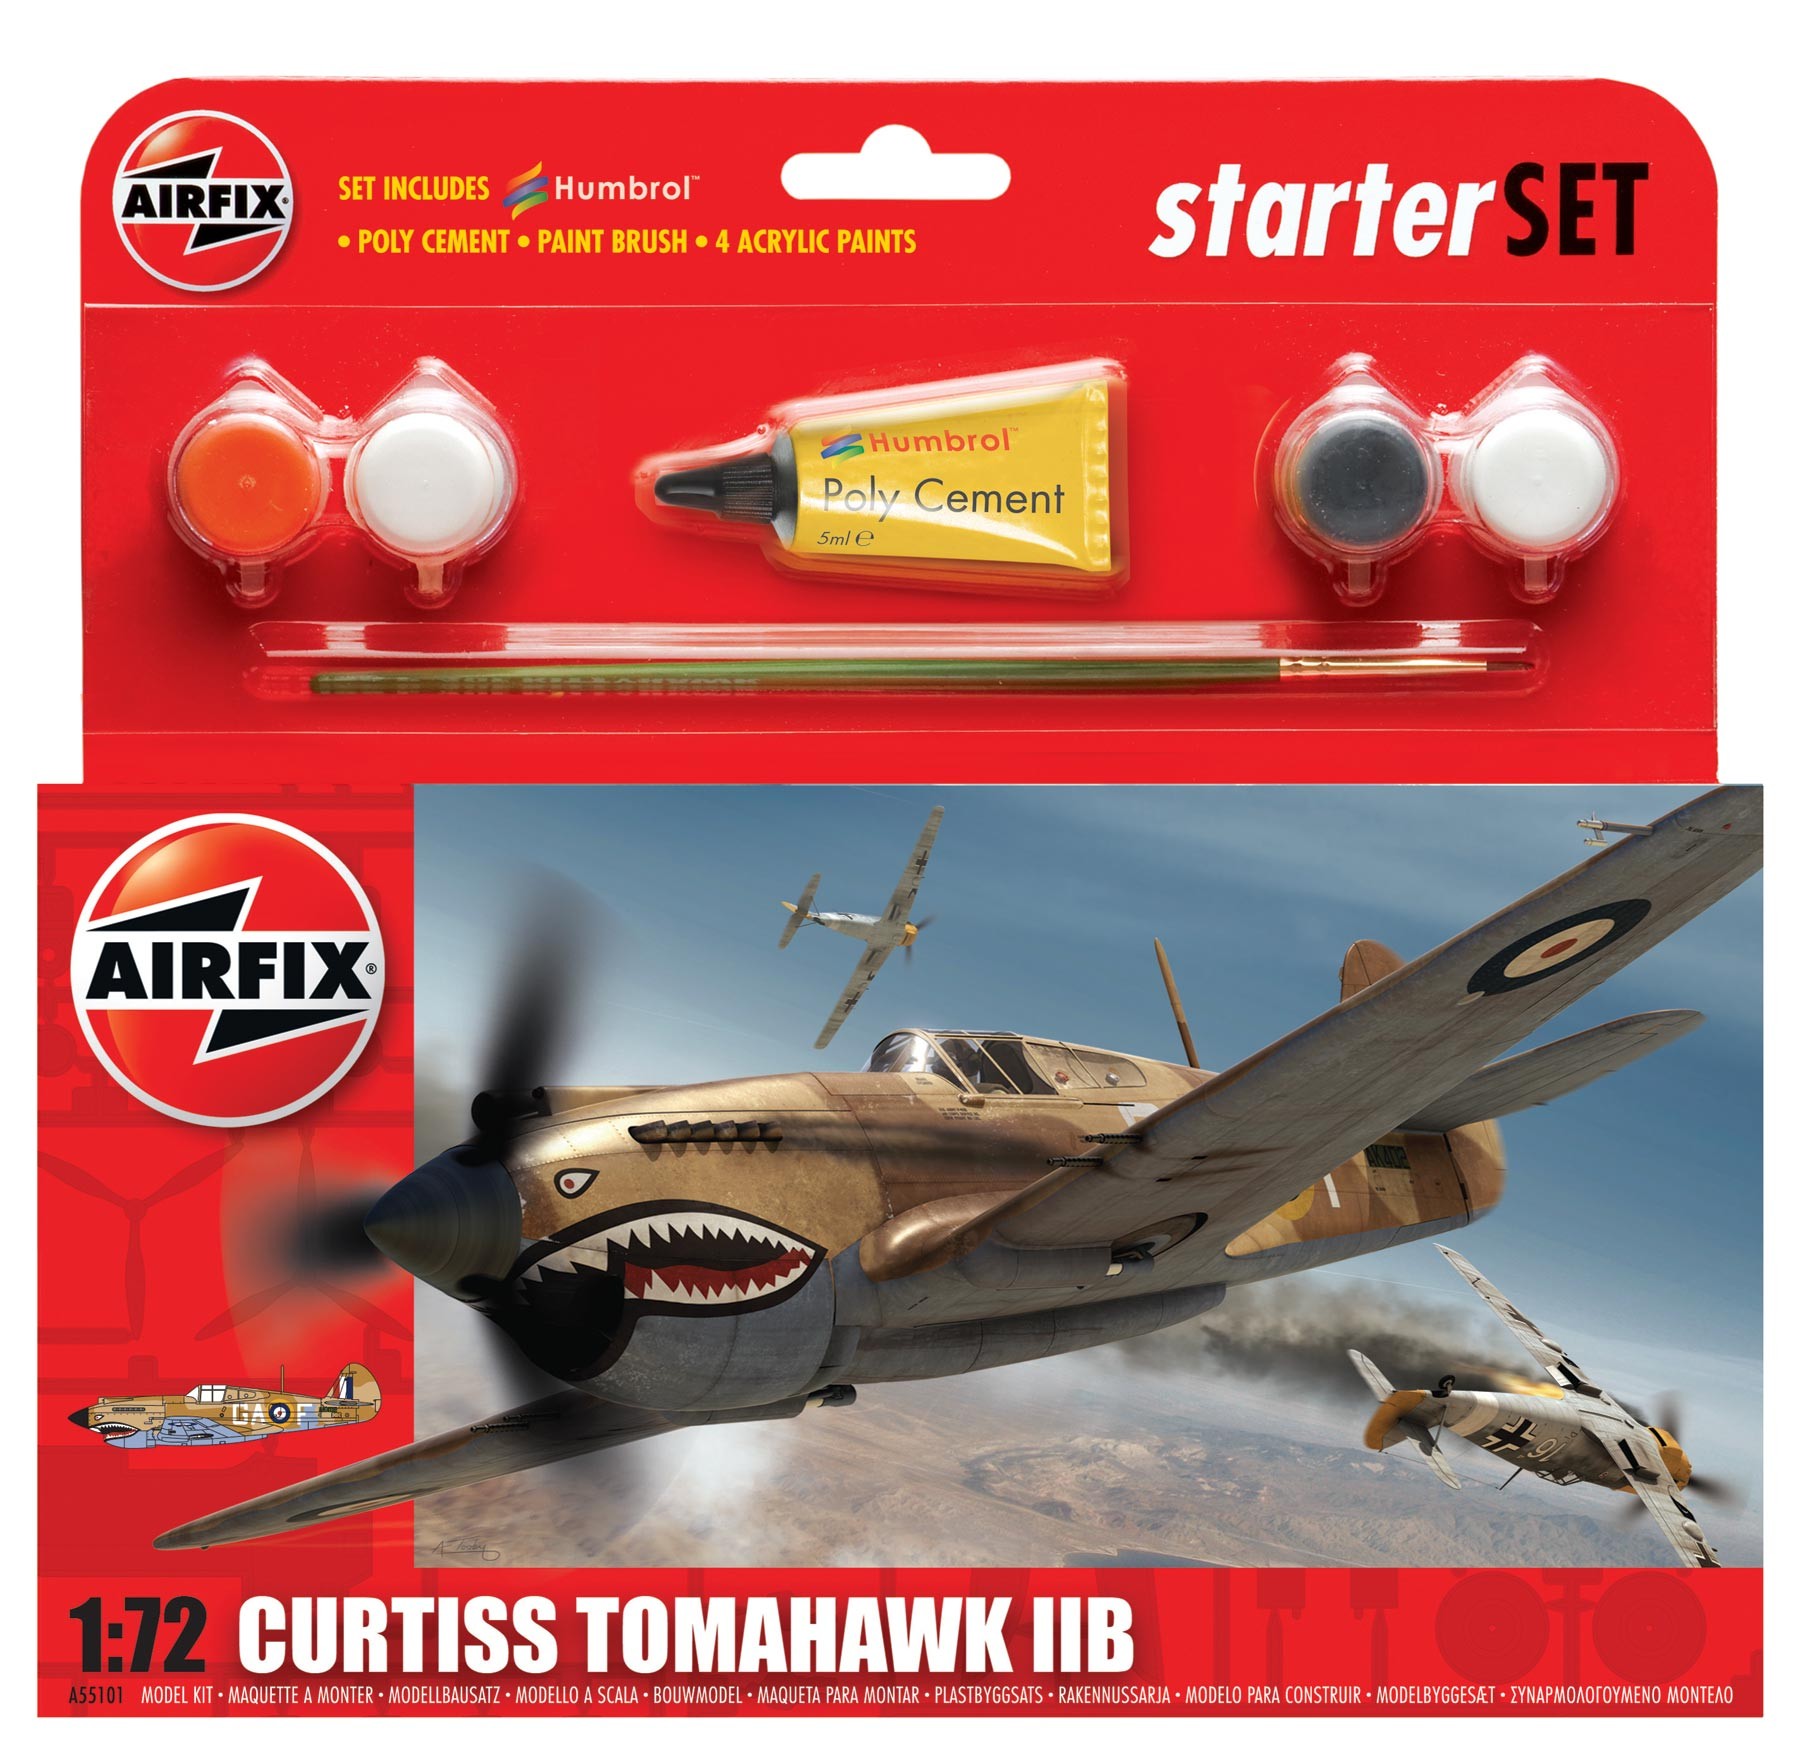 Airfix Curtiss Tomahawk Starter Set in 1:72 bouwpakket met lijm en verf